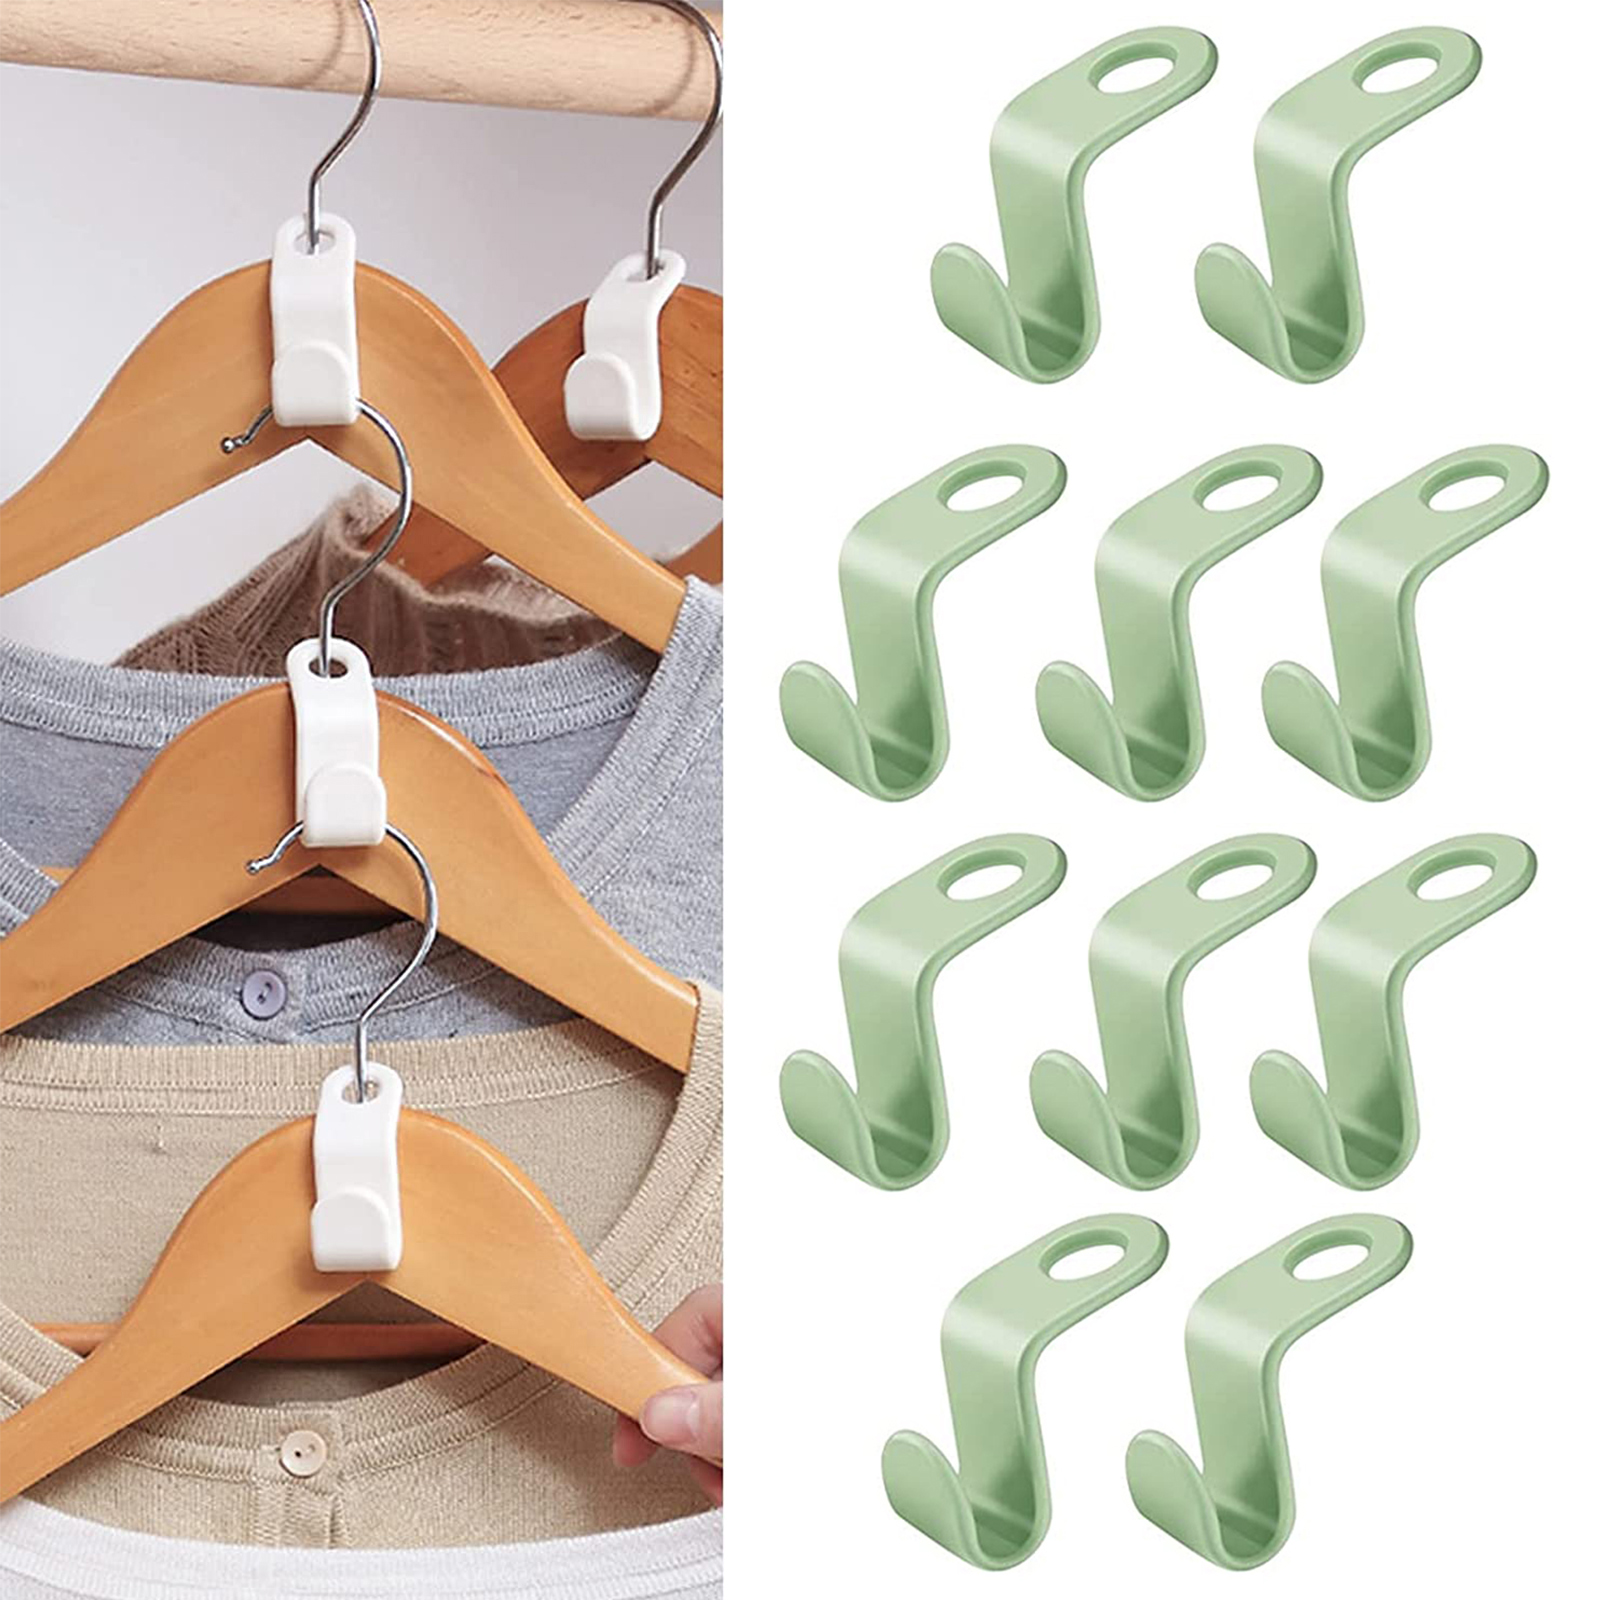 10Pcs Clothes Hanger Hooks Space Saving Closet Connector Hook